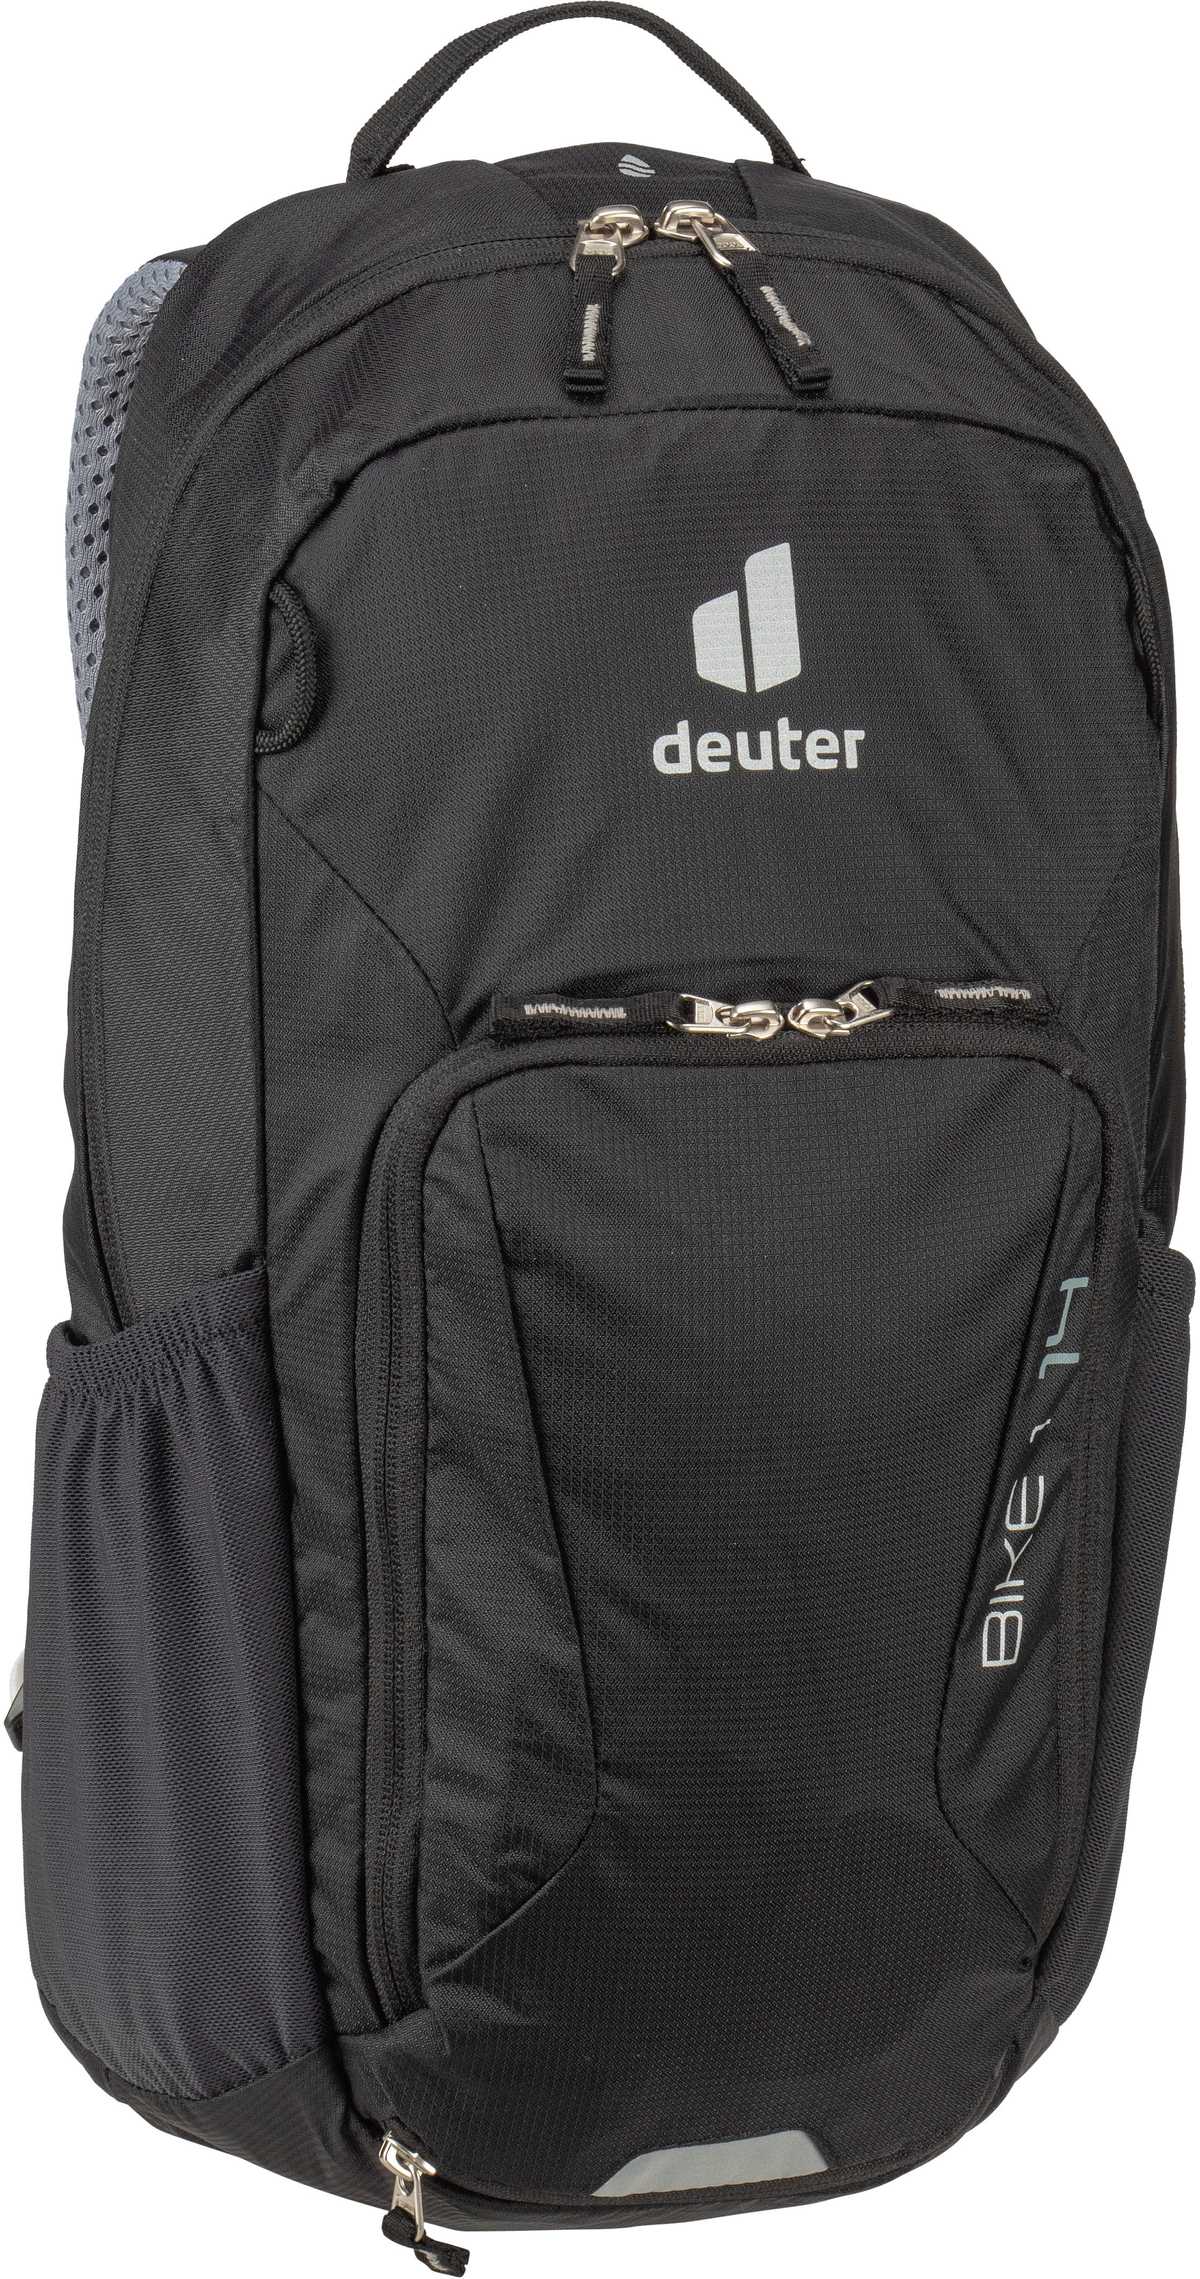 Deuter Deuter Bike I 14 in Schwarz (14 Liter), Rucksack / Backpack